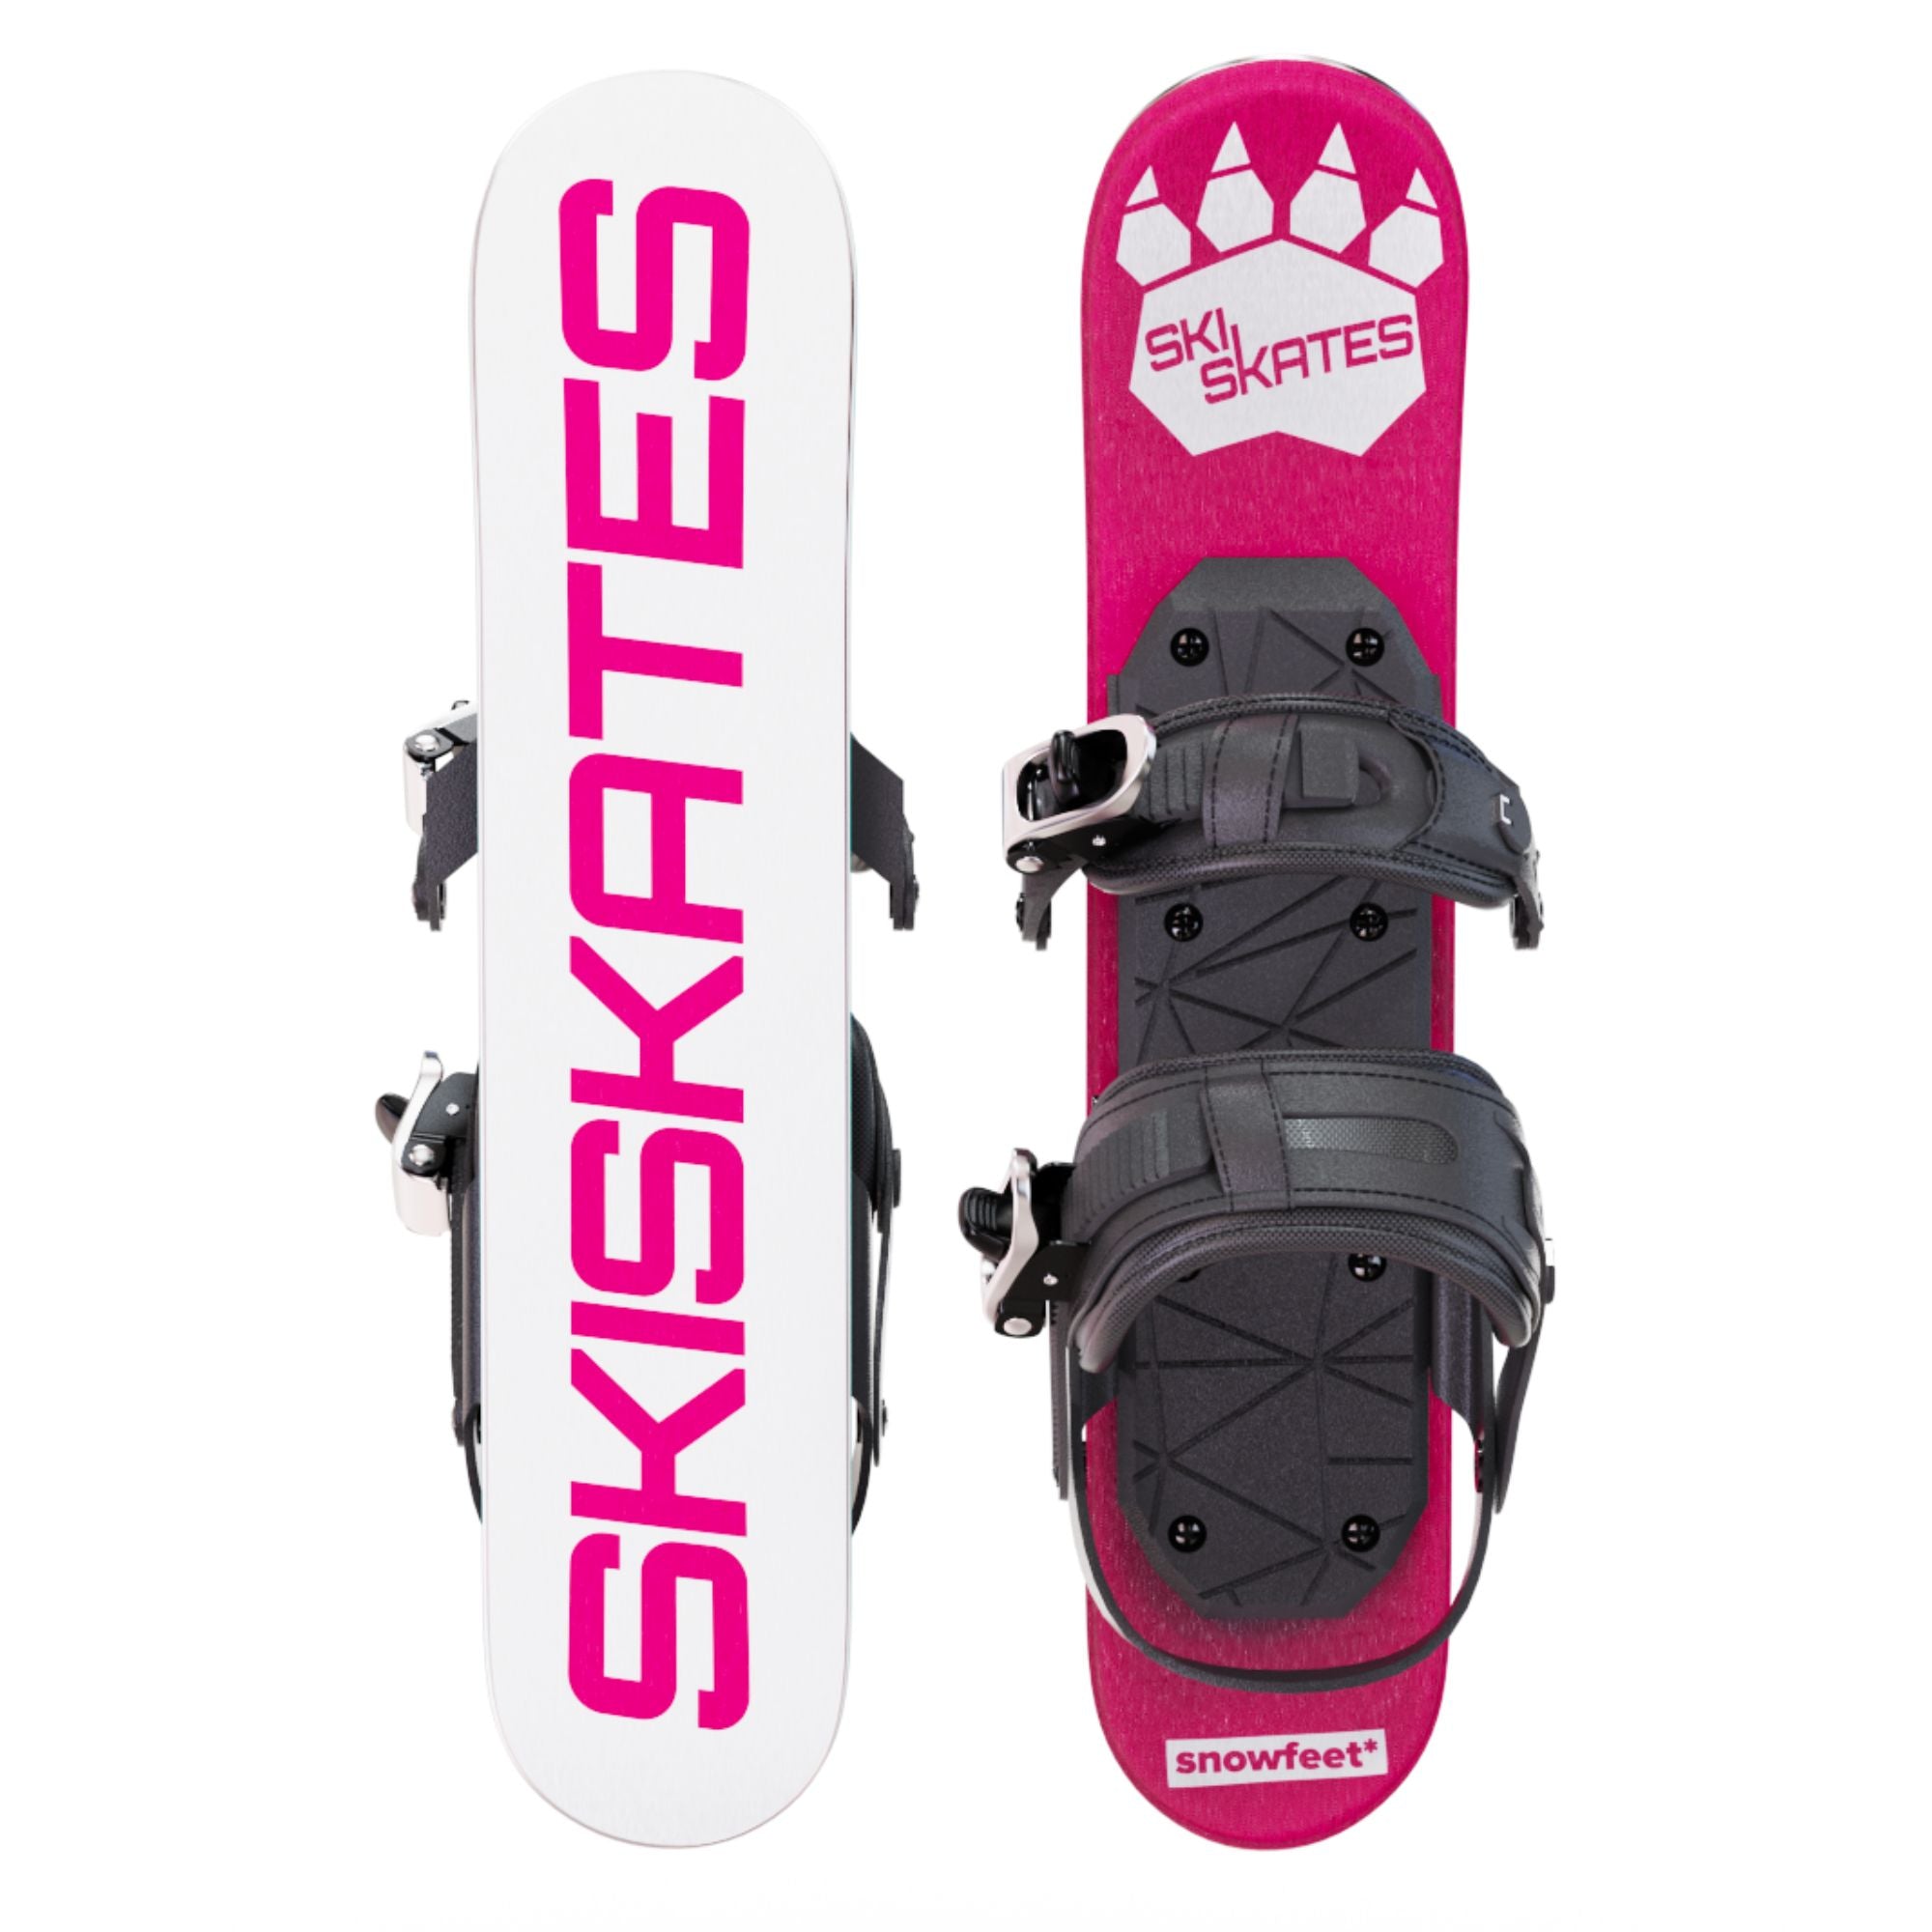 Skiskates | Ski Boots Model | Short Mini Ski by Snowfeet*